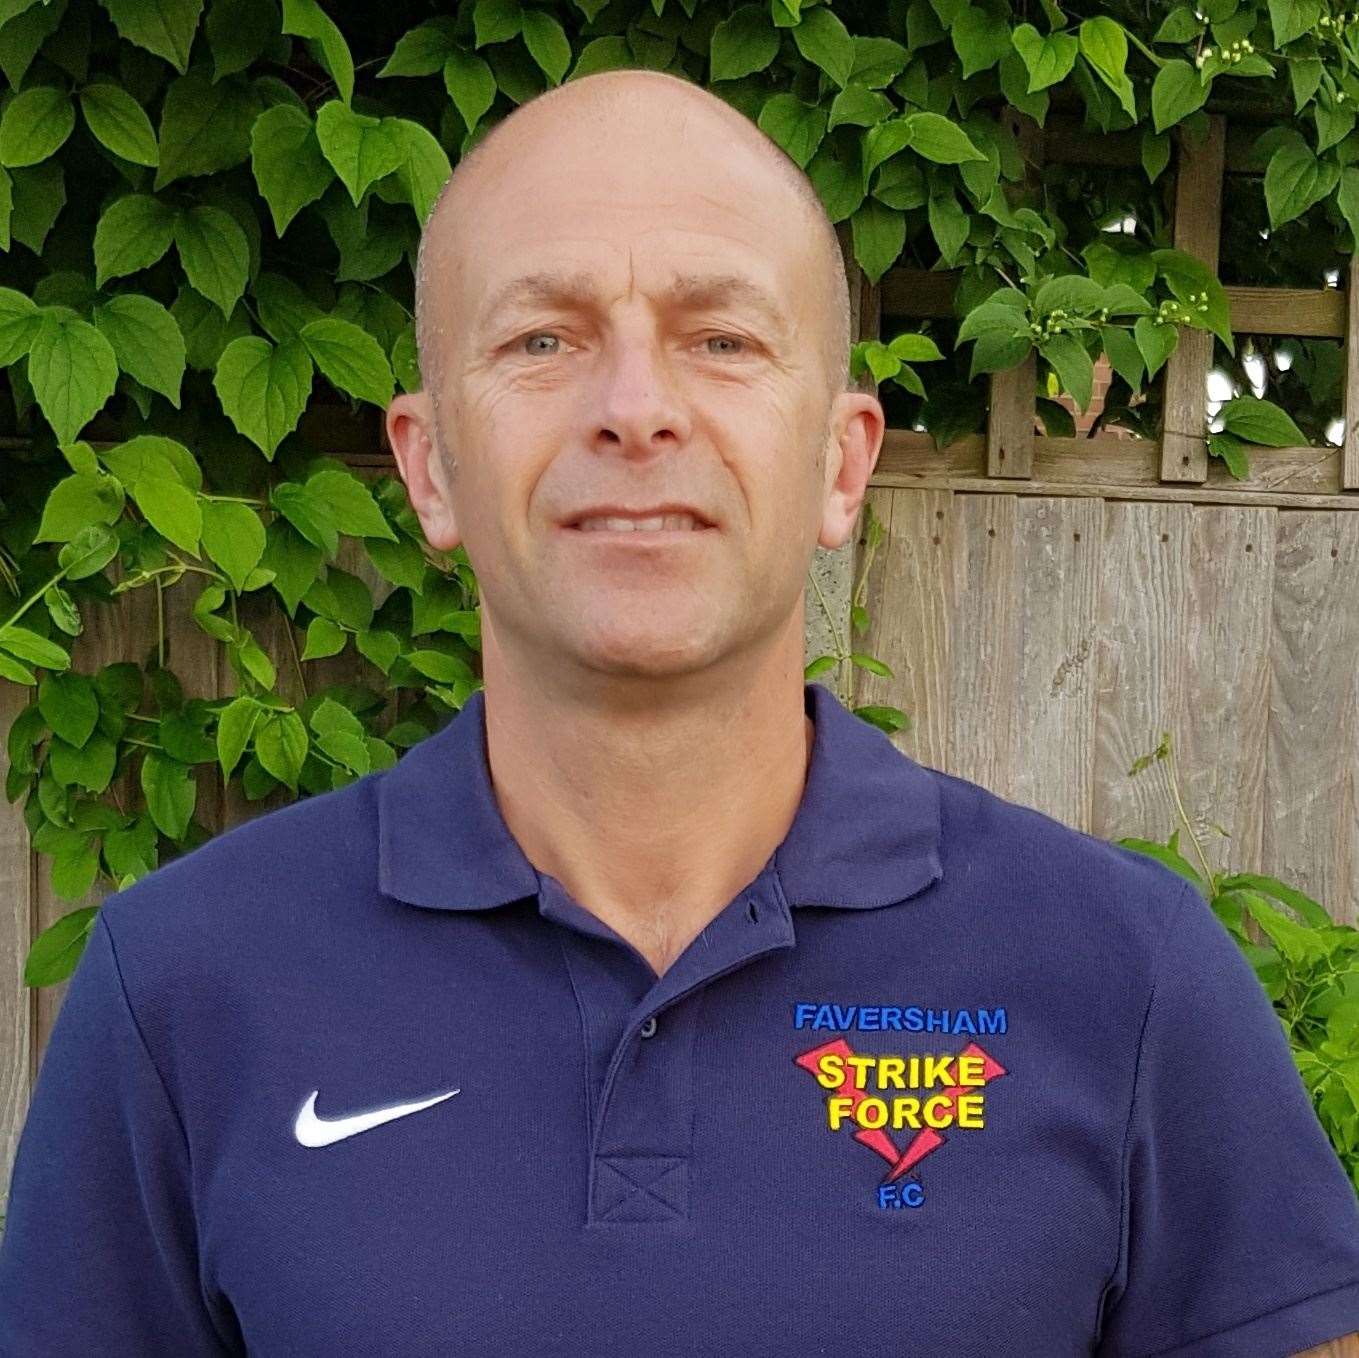 Faversham Strike Force manager Gary Axford